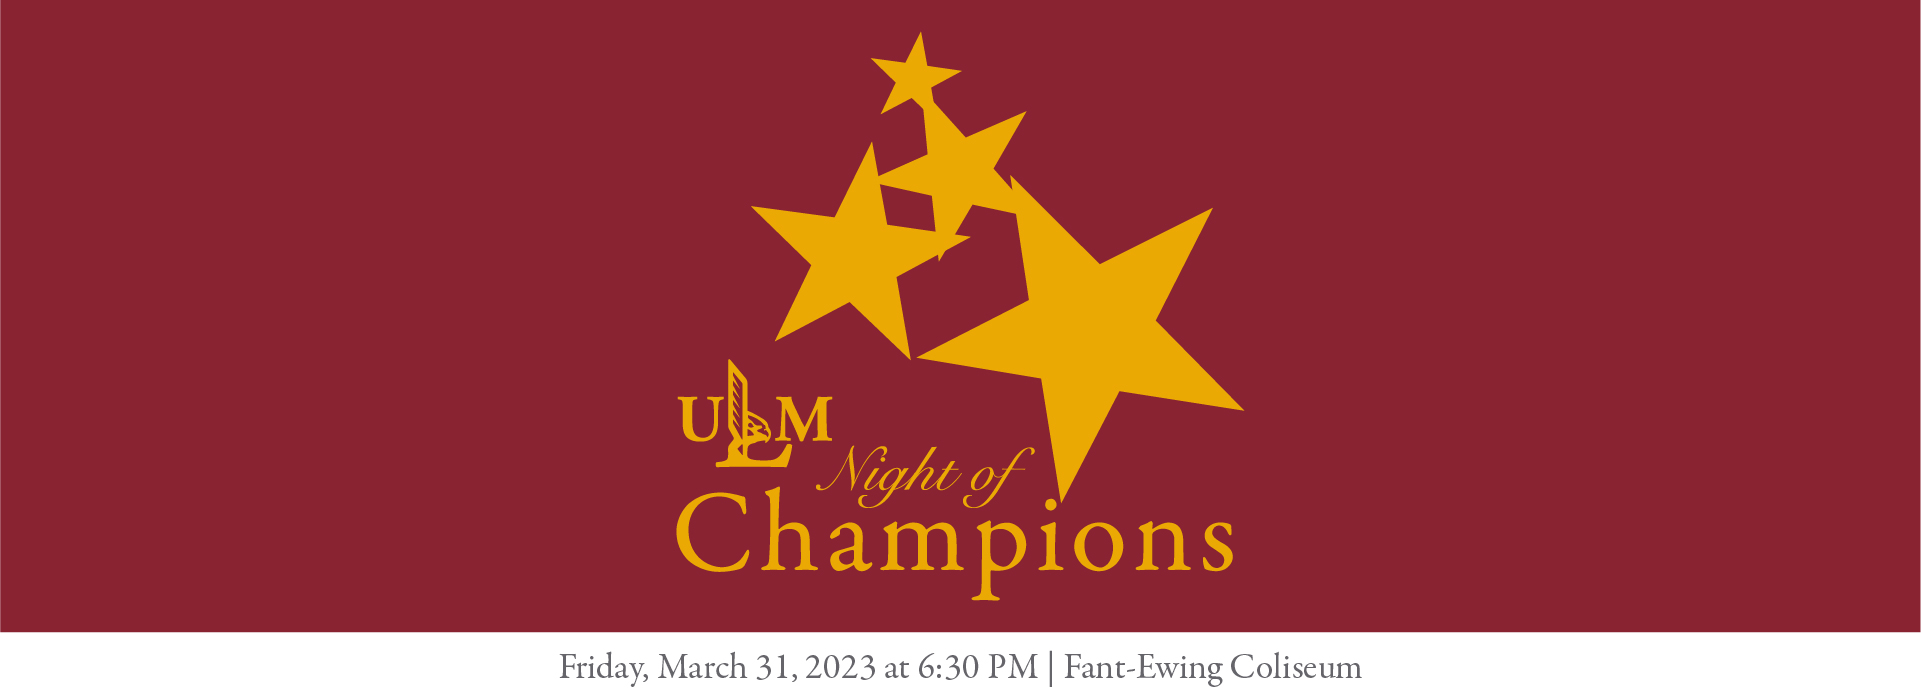 Night of Champions banner ad